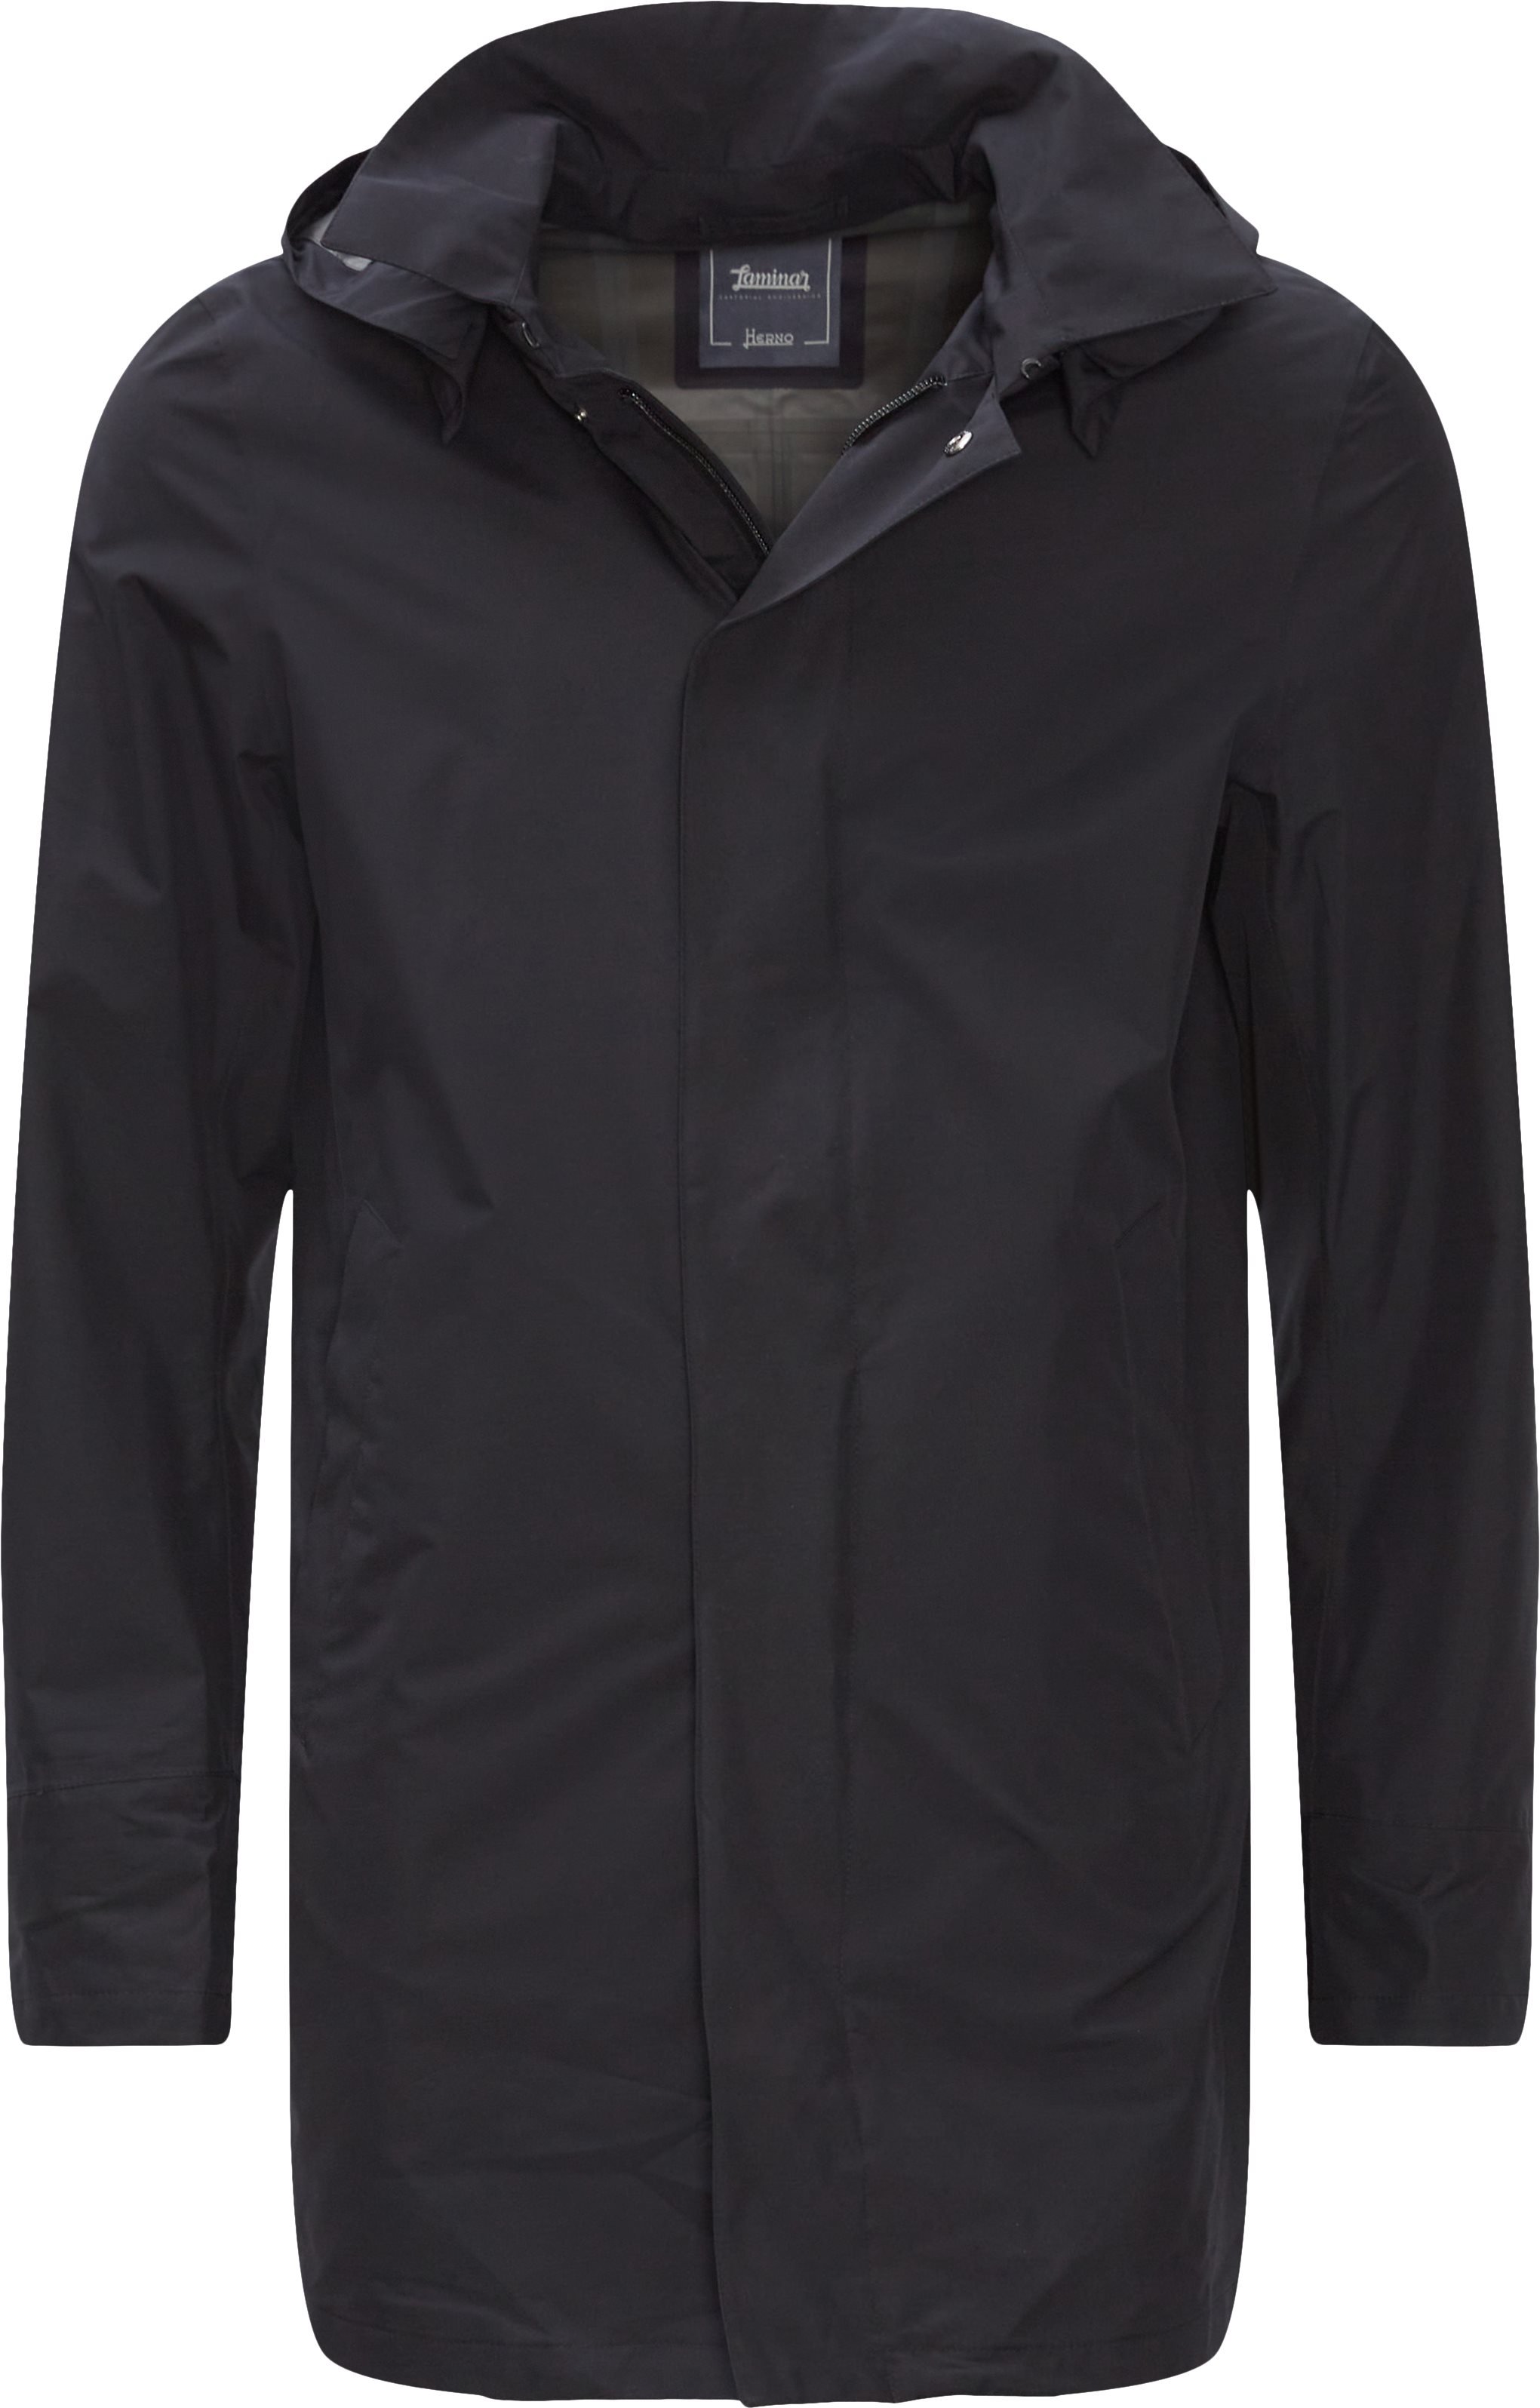 Goretex Windjacket - Jackets - Regular fit - Black